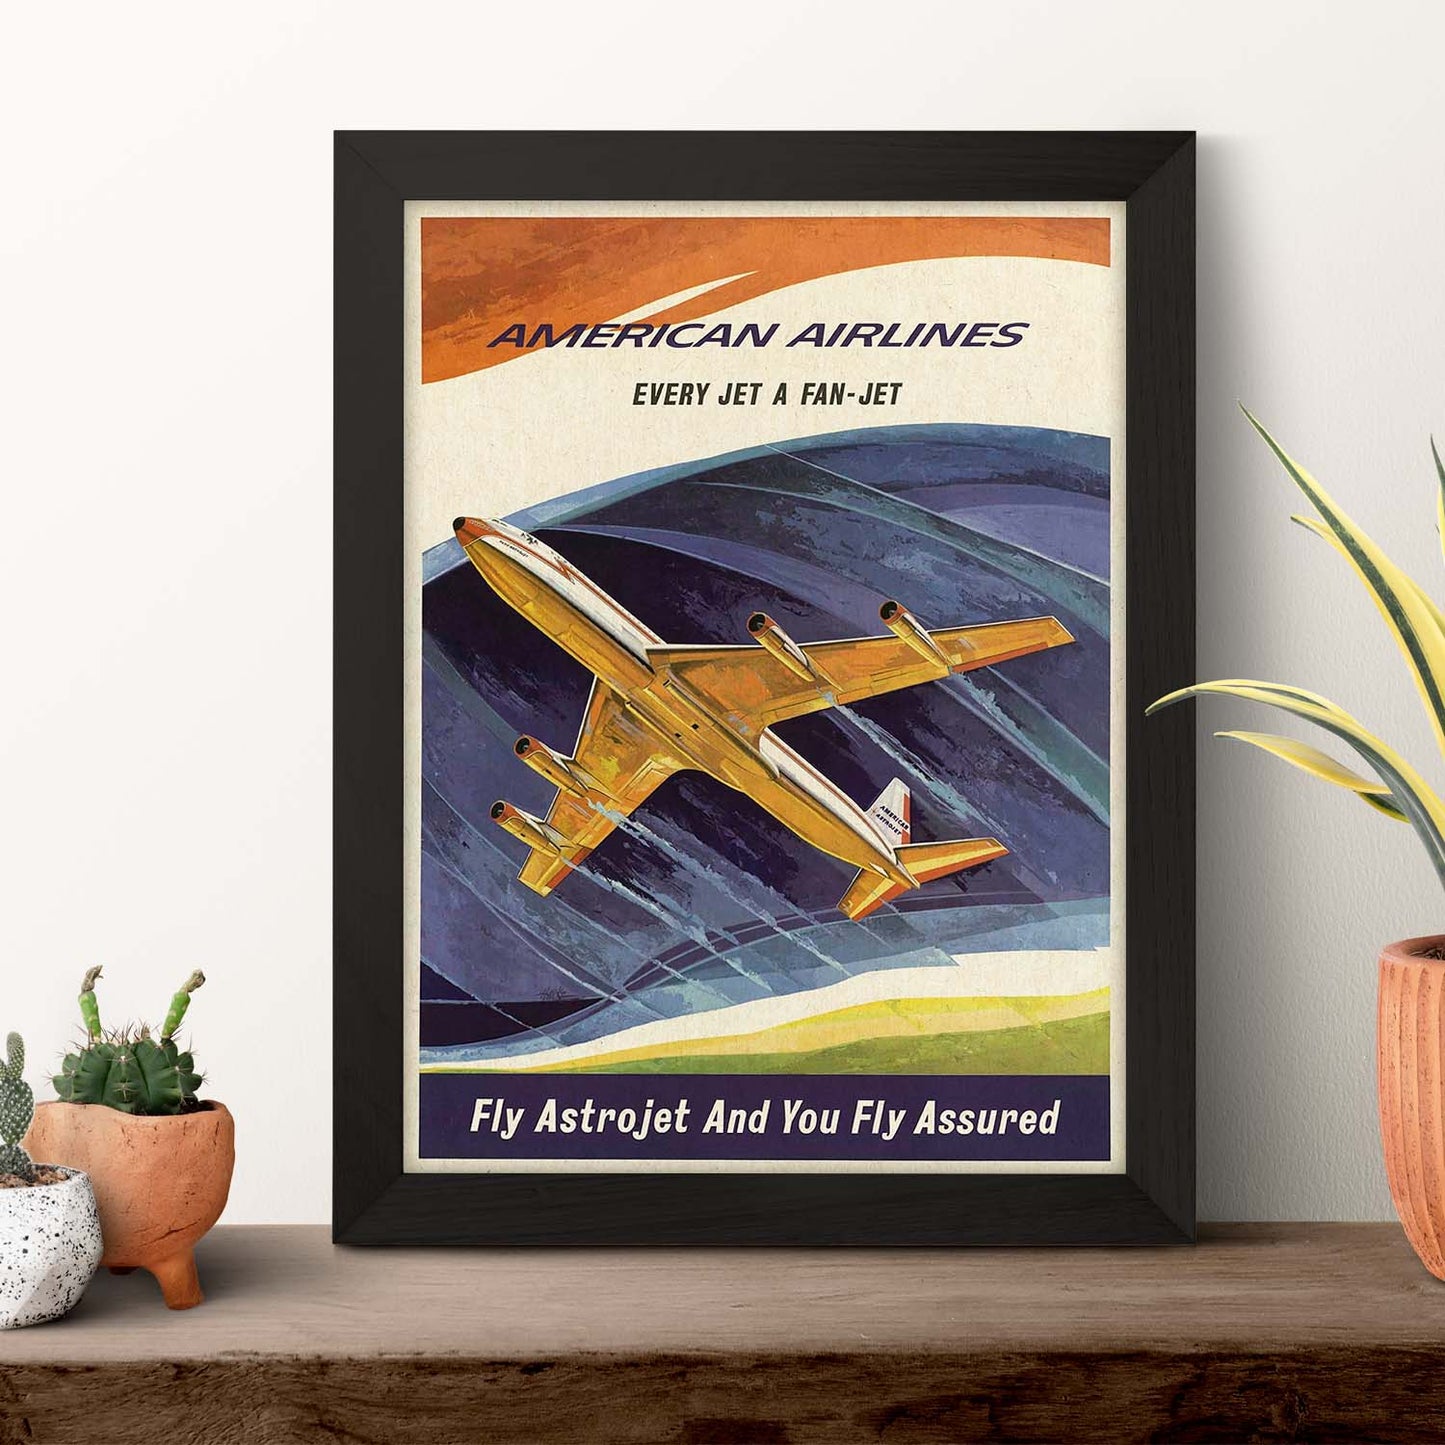 Poster Vintage. Cartel Vintage de América. American Airlines.-Artwork-Nacnic-Nacnic Estudio SL